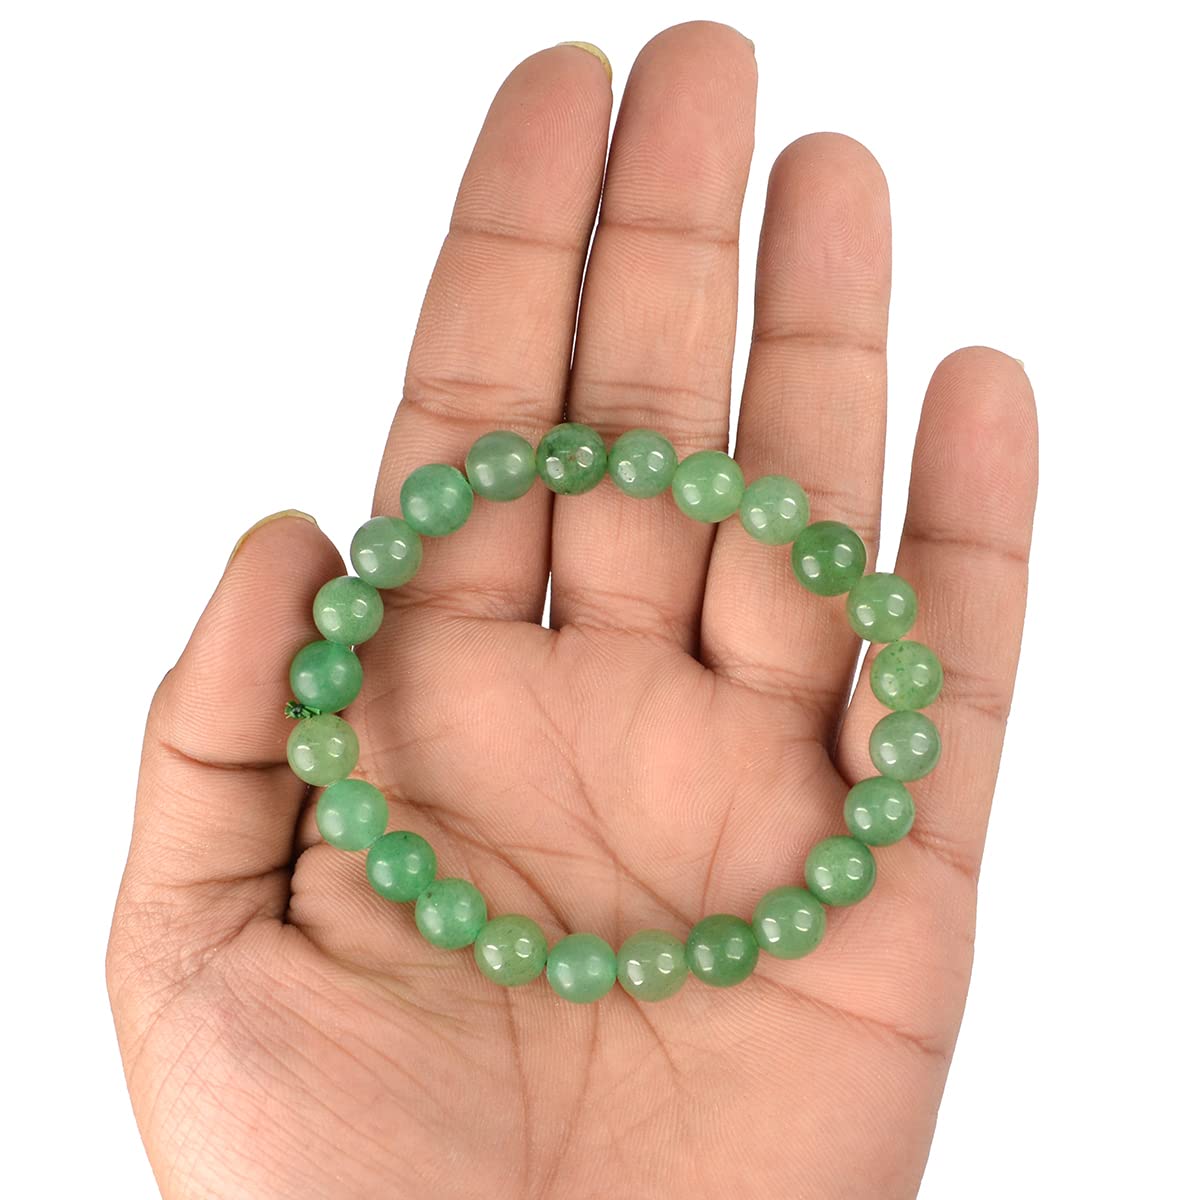 Green Jade Healing Crystal Bracelet - 8mm Round Beads - Beaded Bracelet